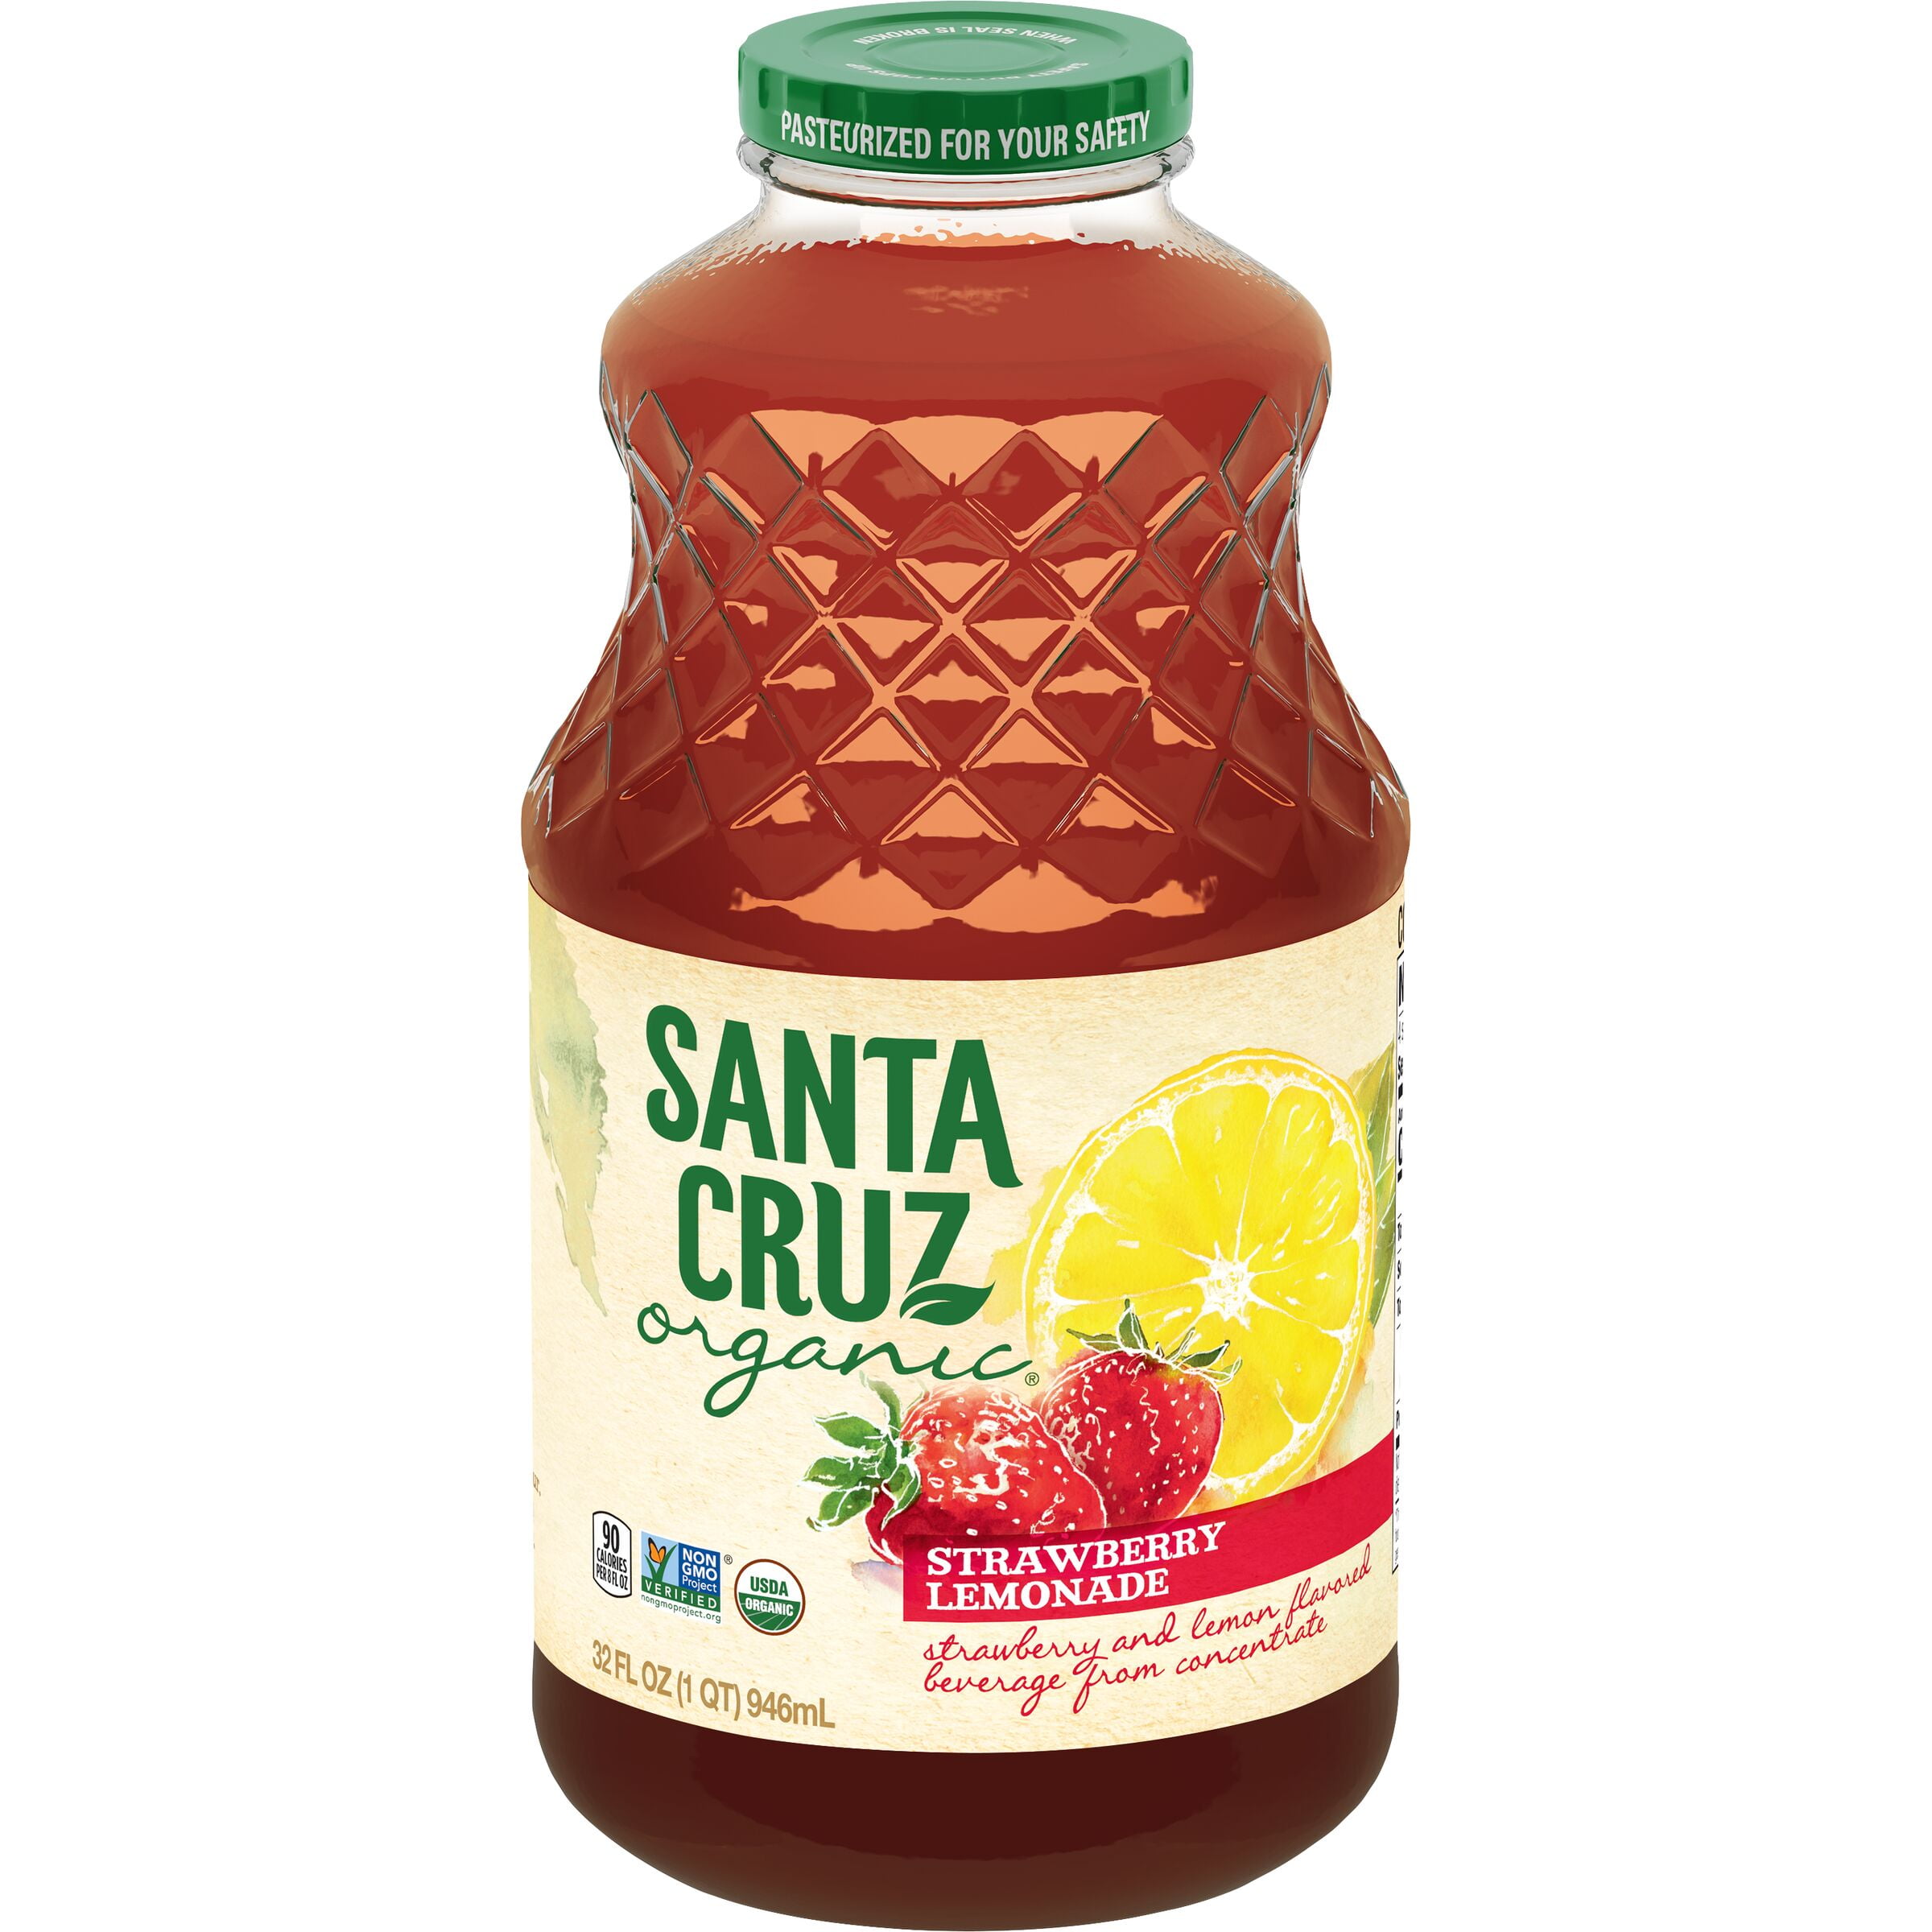 Santa Cruz Organic Strawberry Lemonade, 32 oz, Glass Bottle